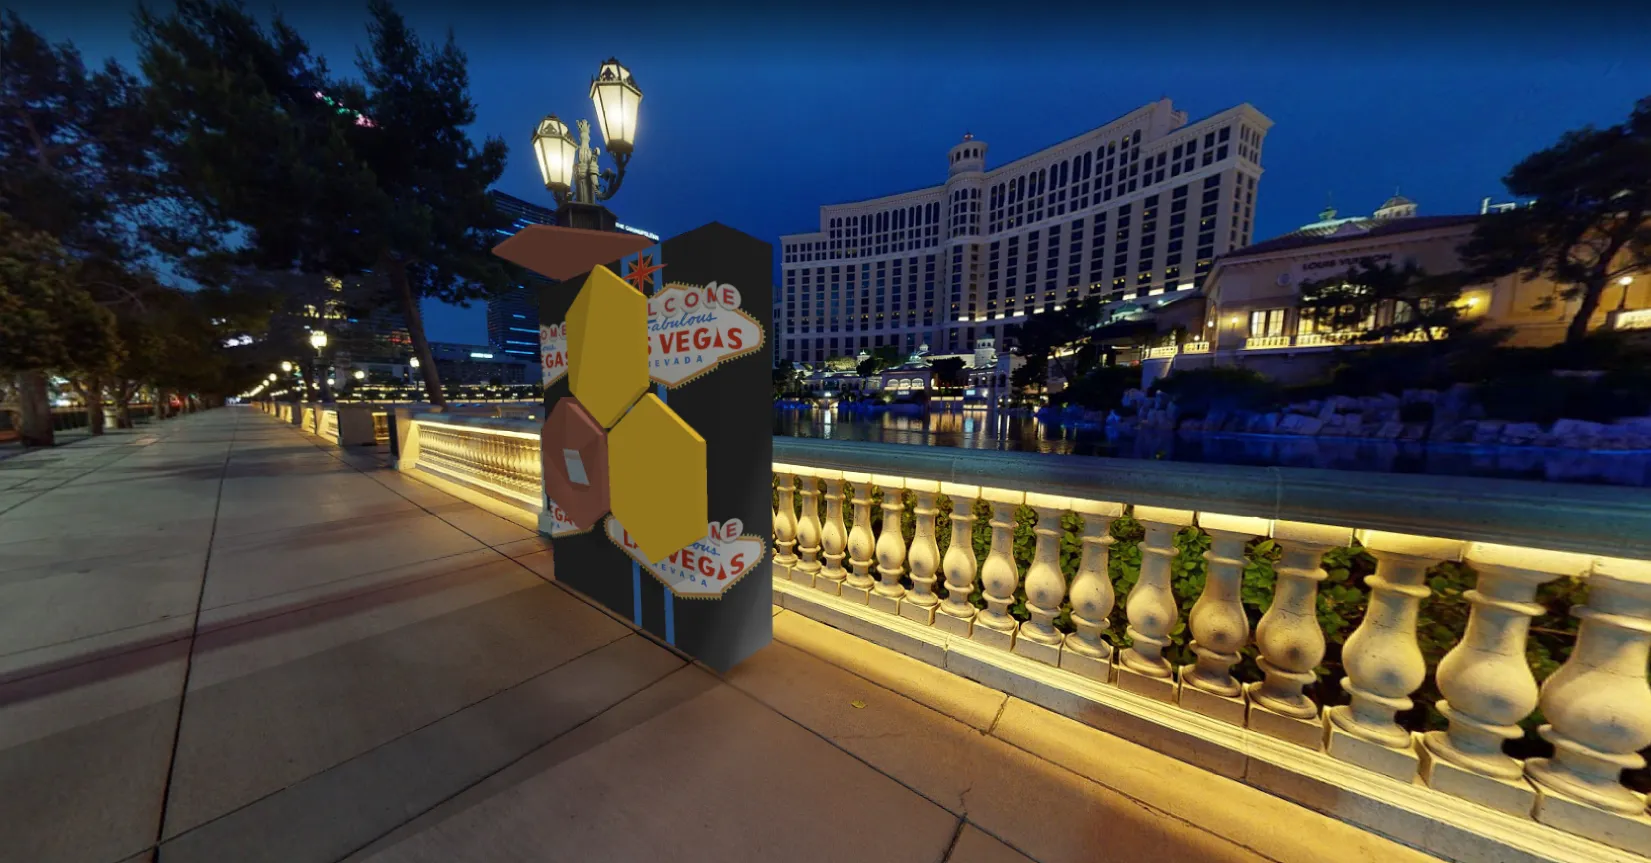 Vegas Street View